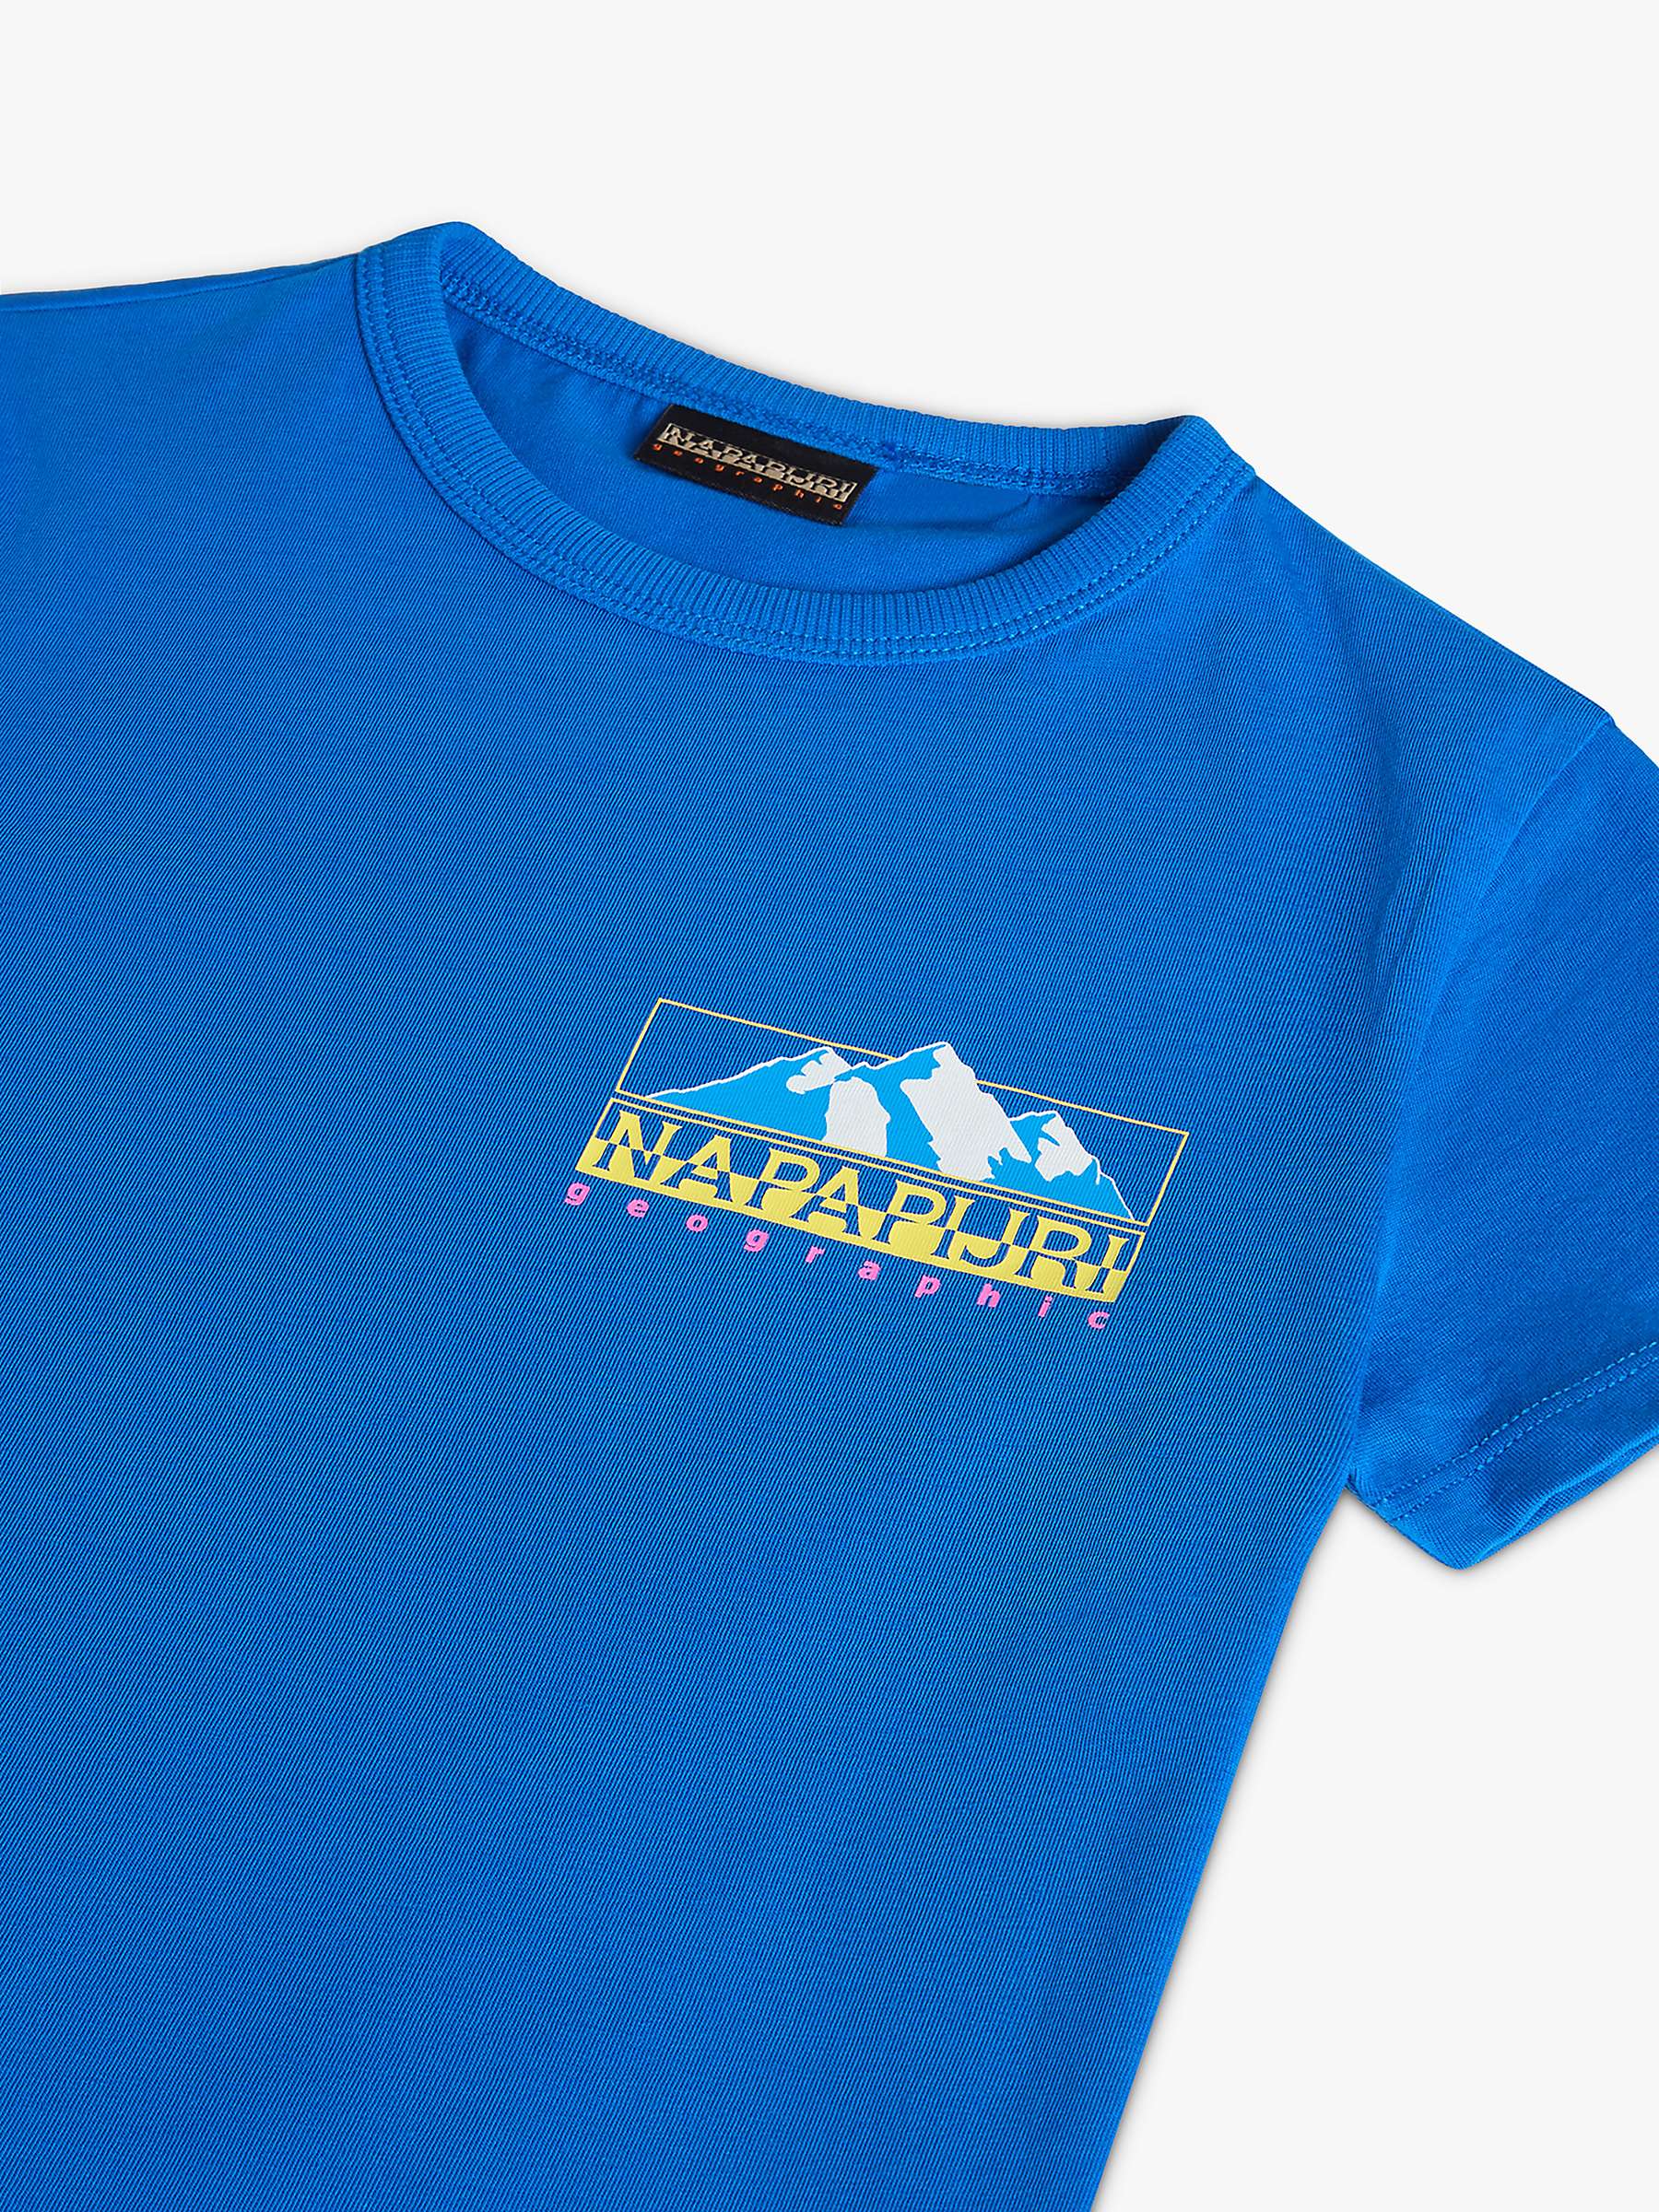 Buy Napapijri Kids' Liard Logo Mountain Graphic T-Shirt, Royal Blue Online at johnlewis.com